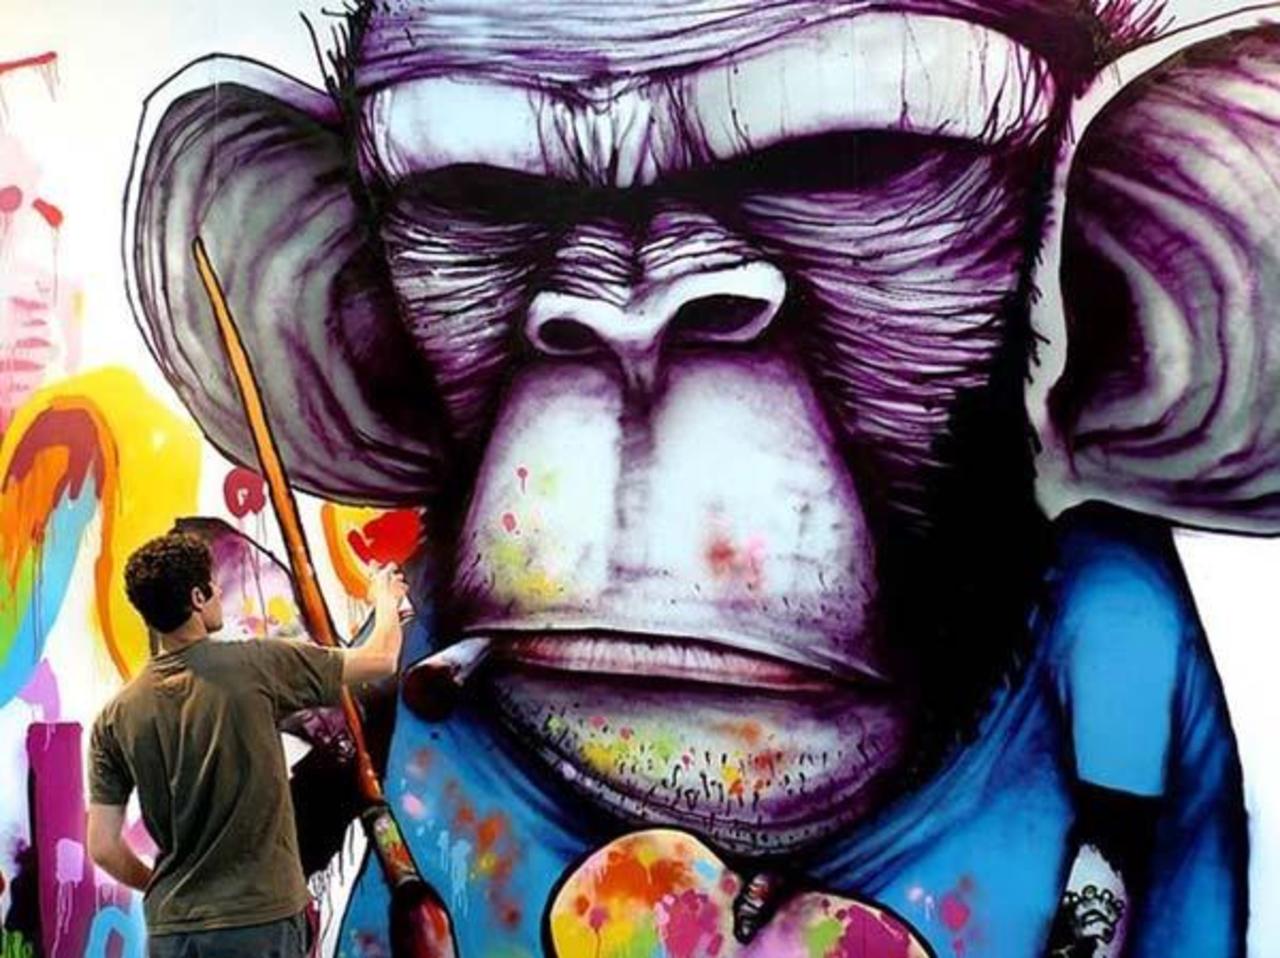 “@Pitchuskita: French artist Dran
#streetart #art #graffiti #mural http://t.co/dNlN9jwU7N”